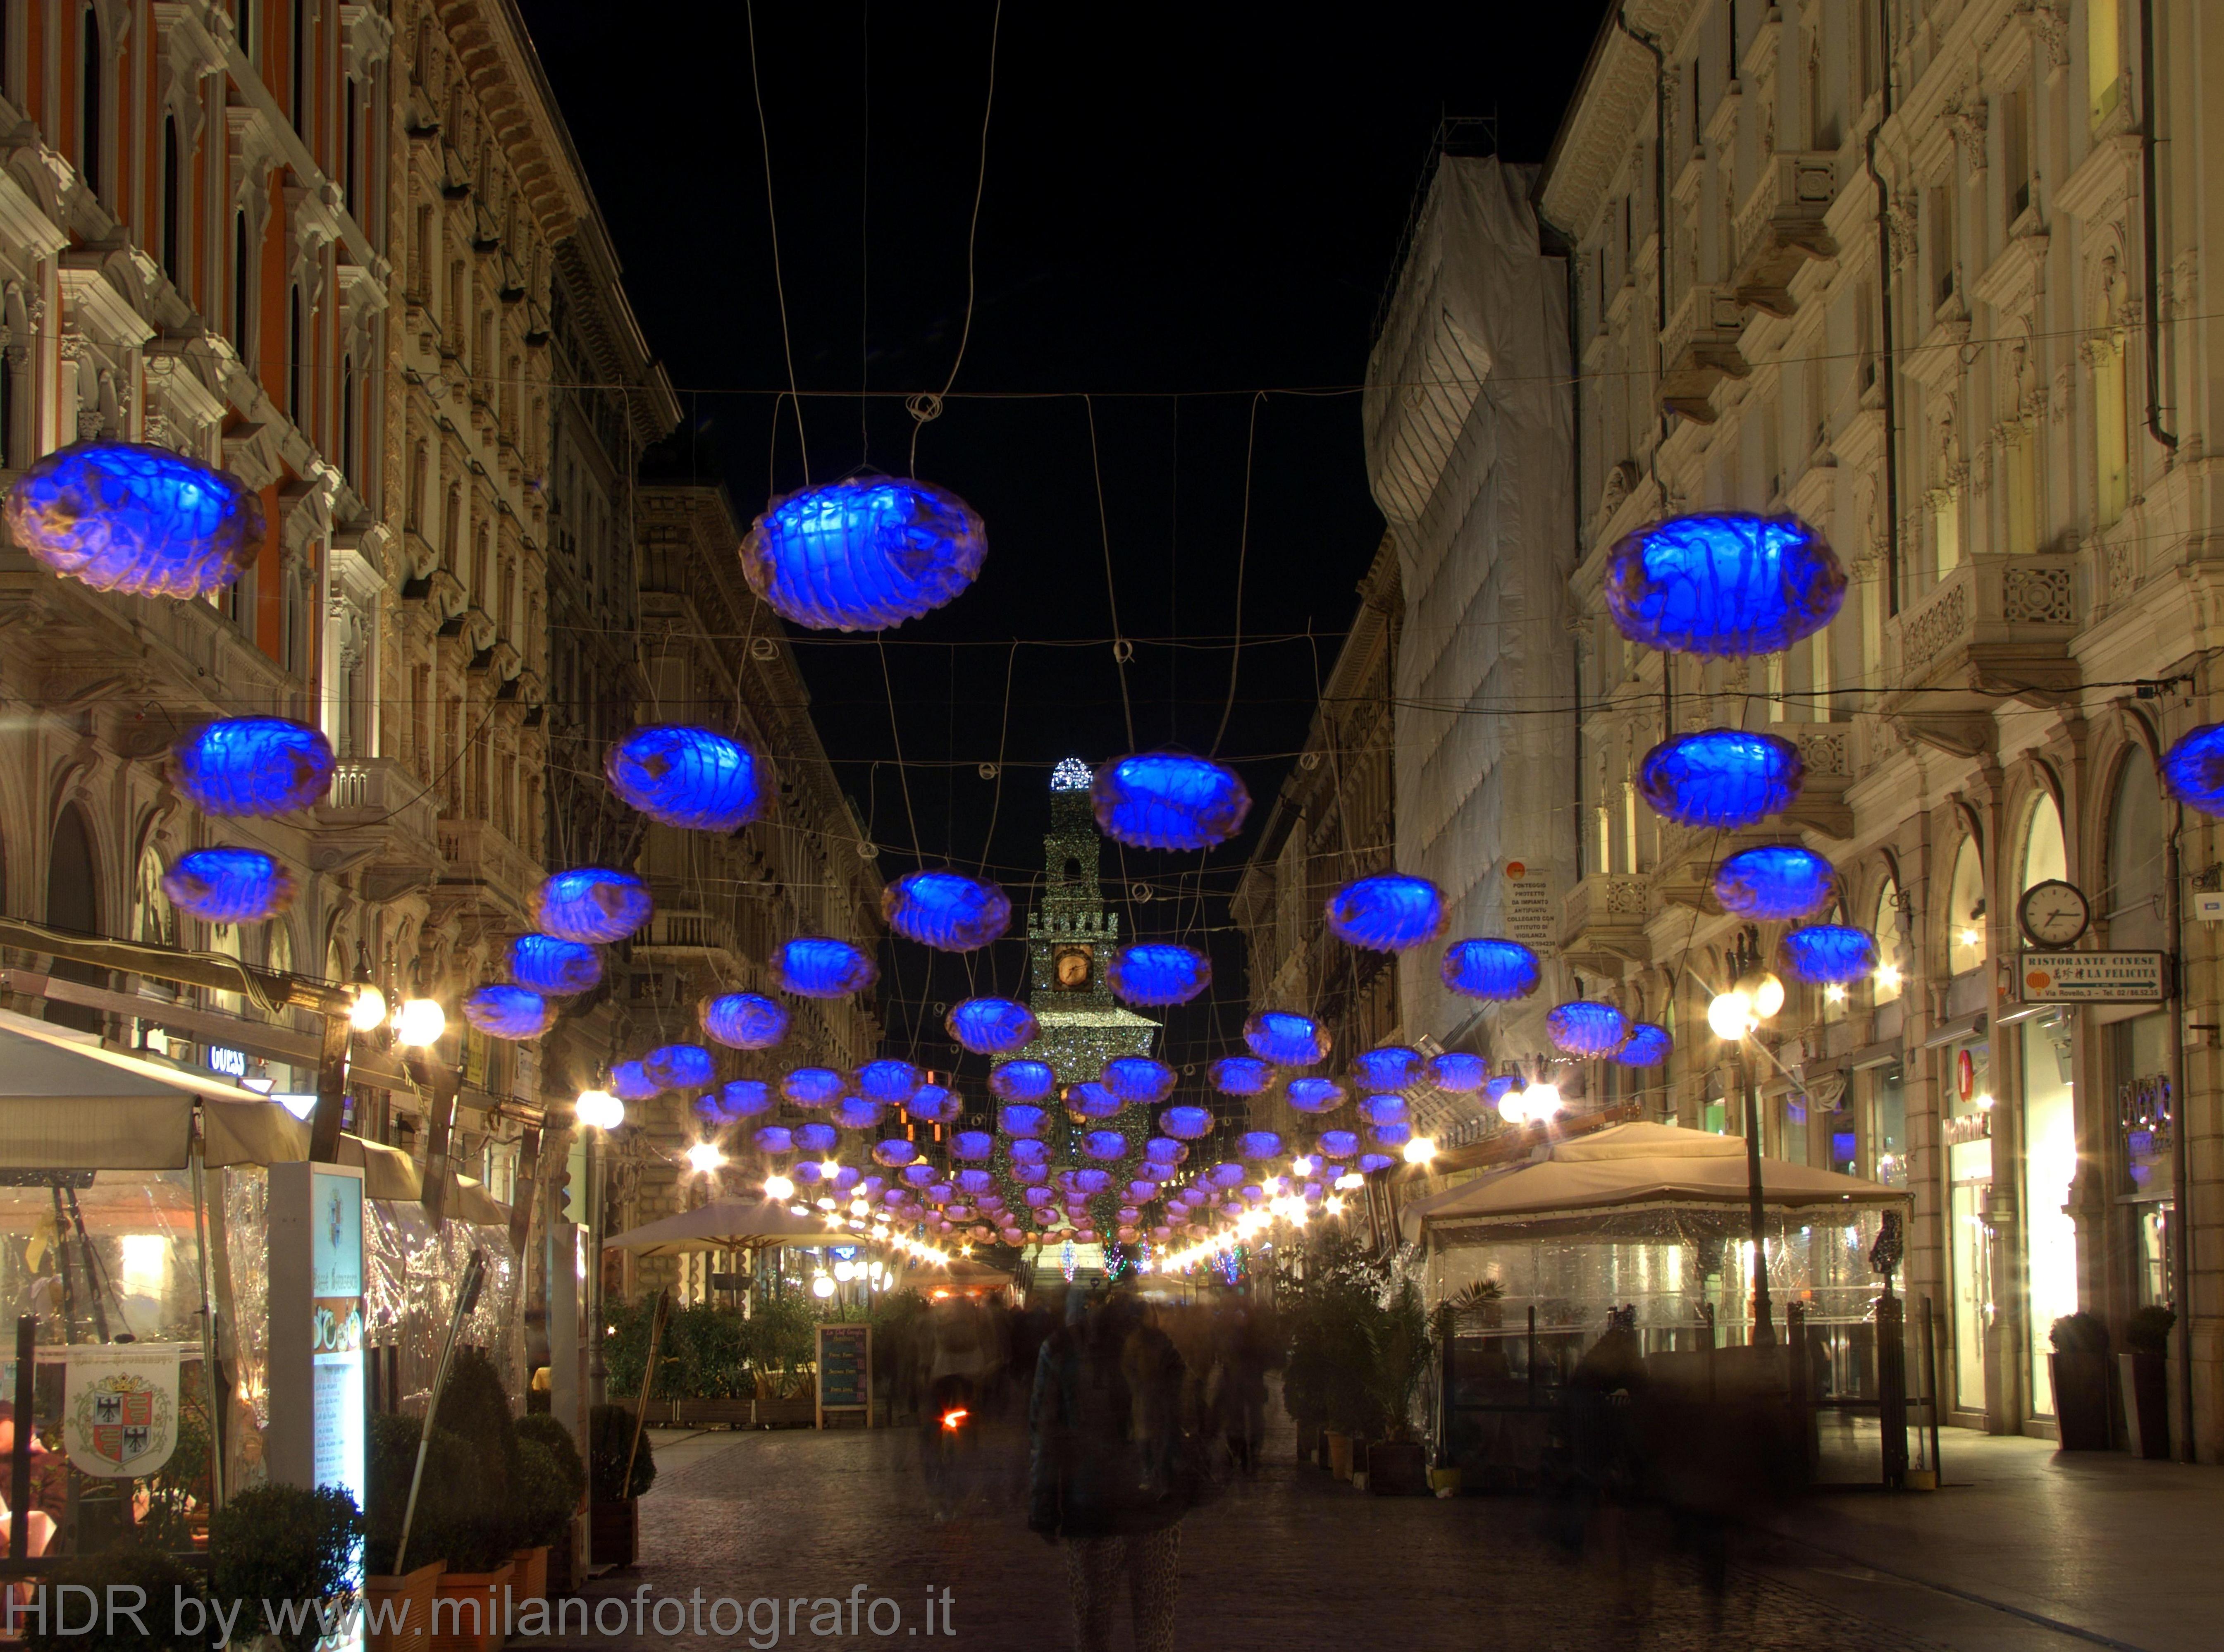 Milan (Italy): Christmas decorations in Dante street - Milan (Italy)